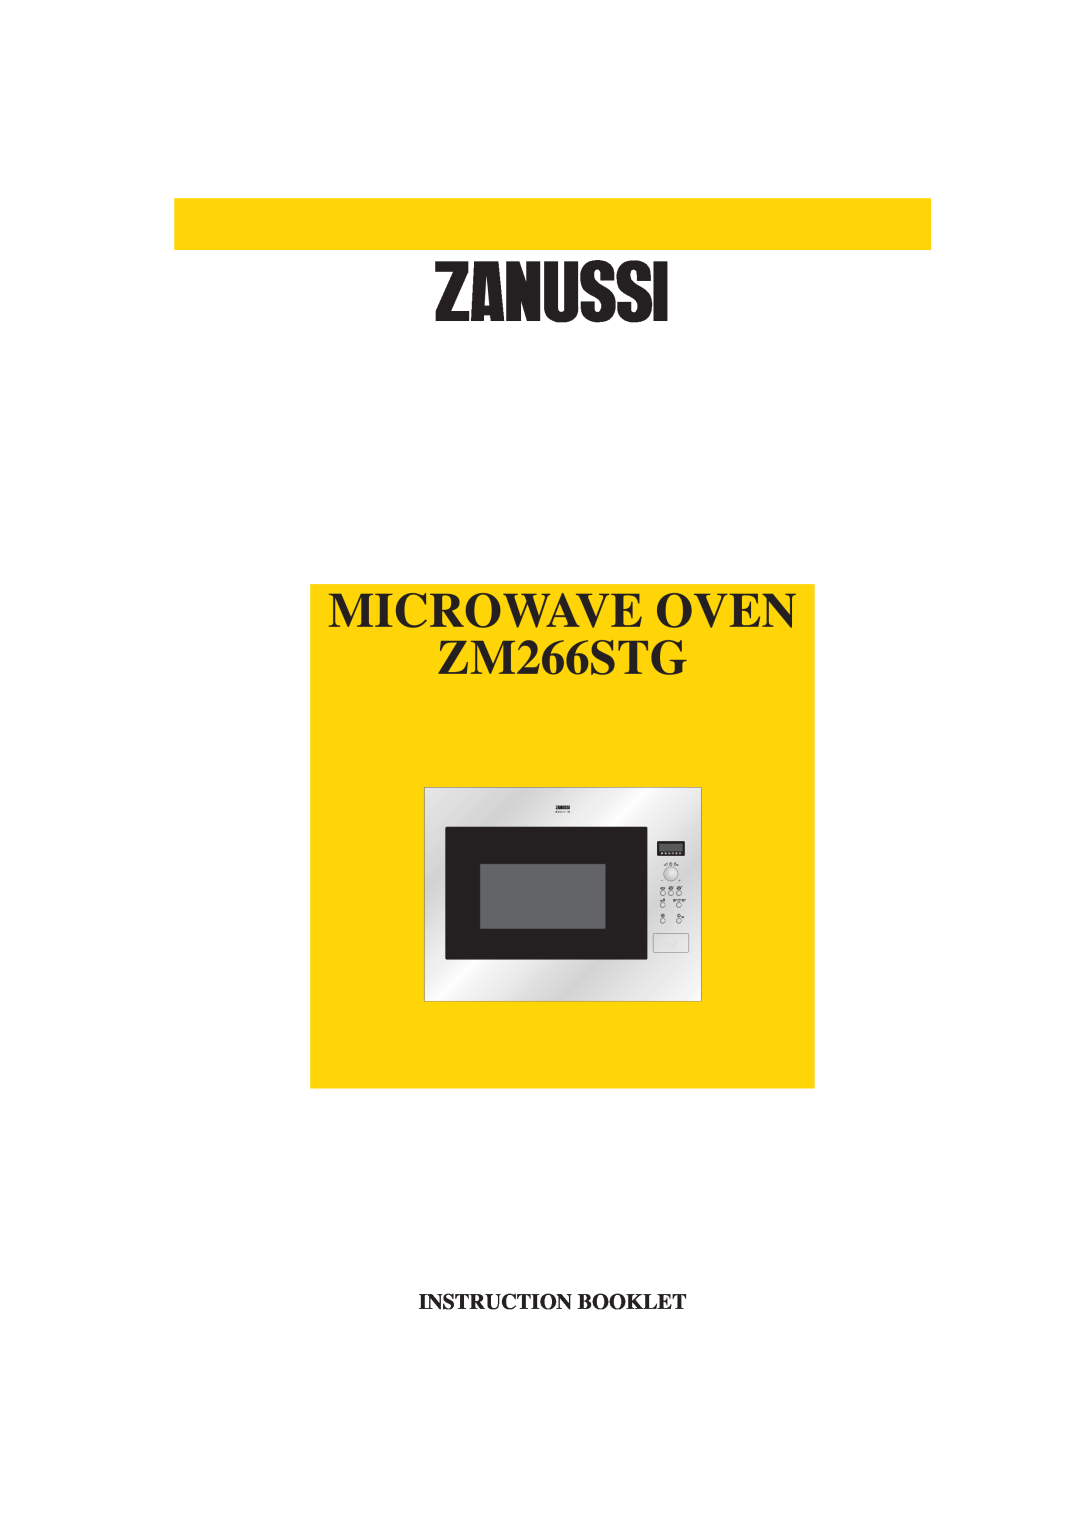 Zanussi manual MICROWAVE OVEN ZM266STG, Instruction Booklet 